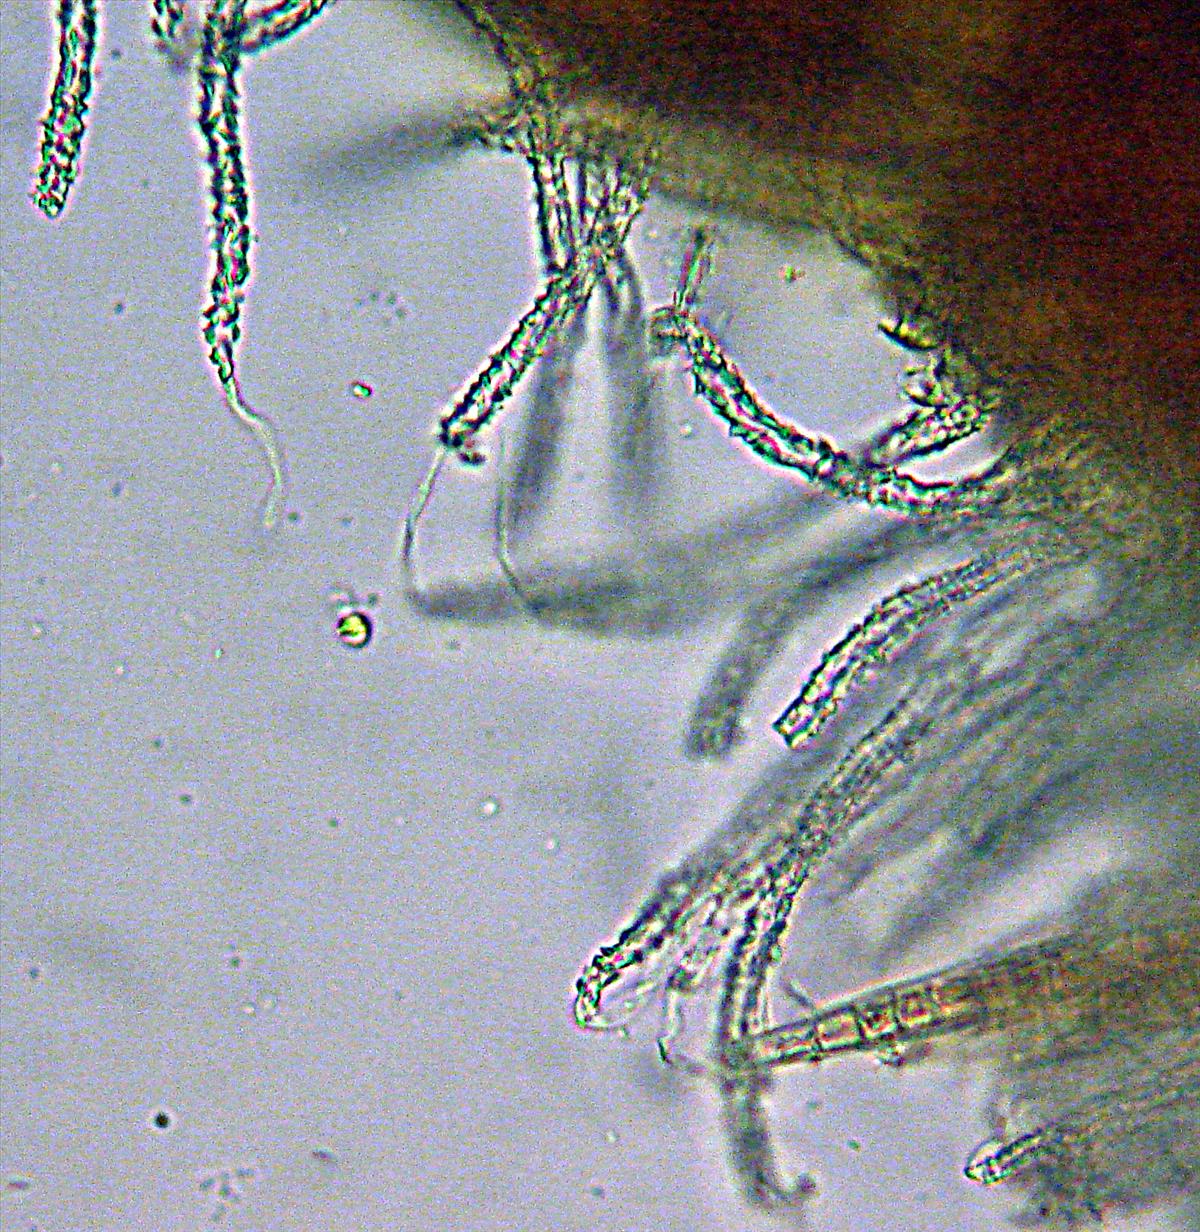 Flagelloscypha minutissima (door Anneke van der Putte)